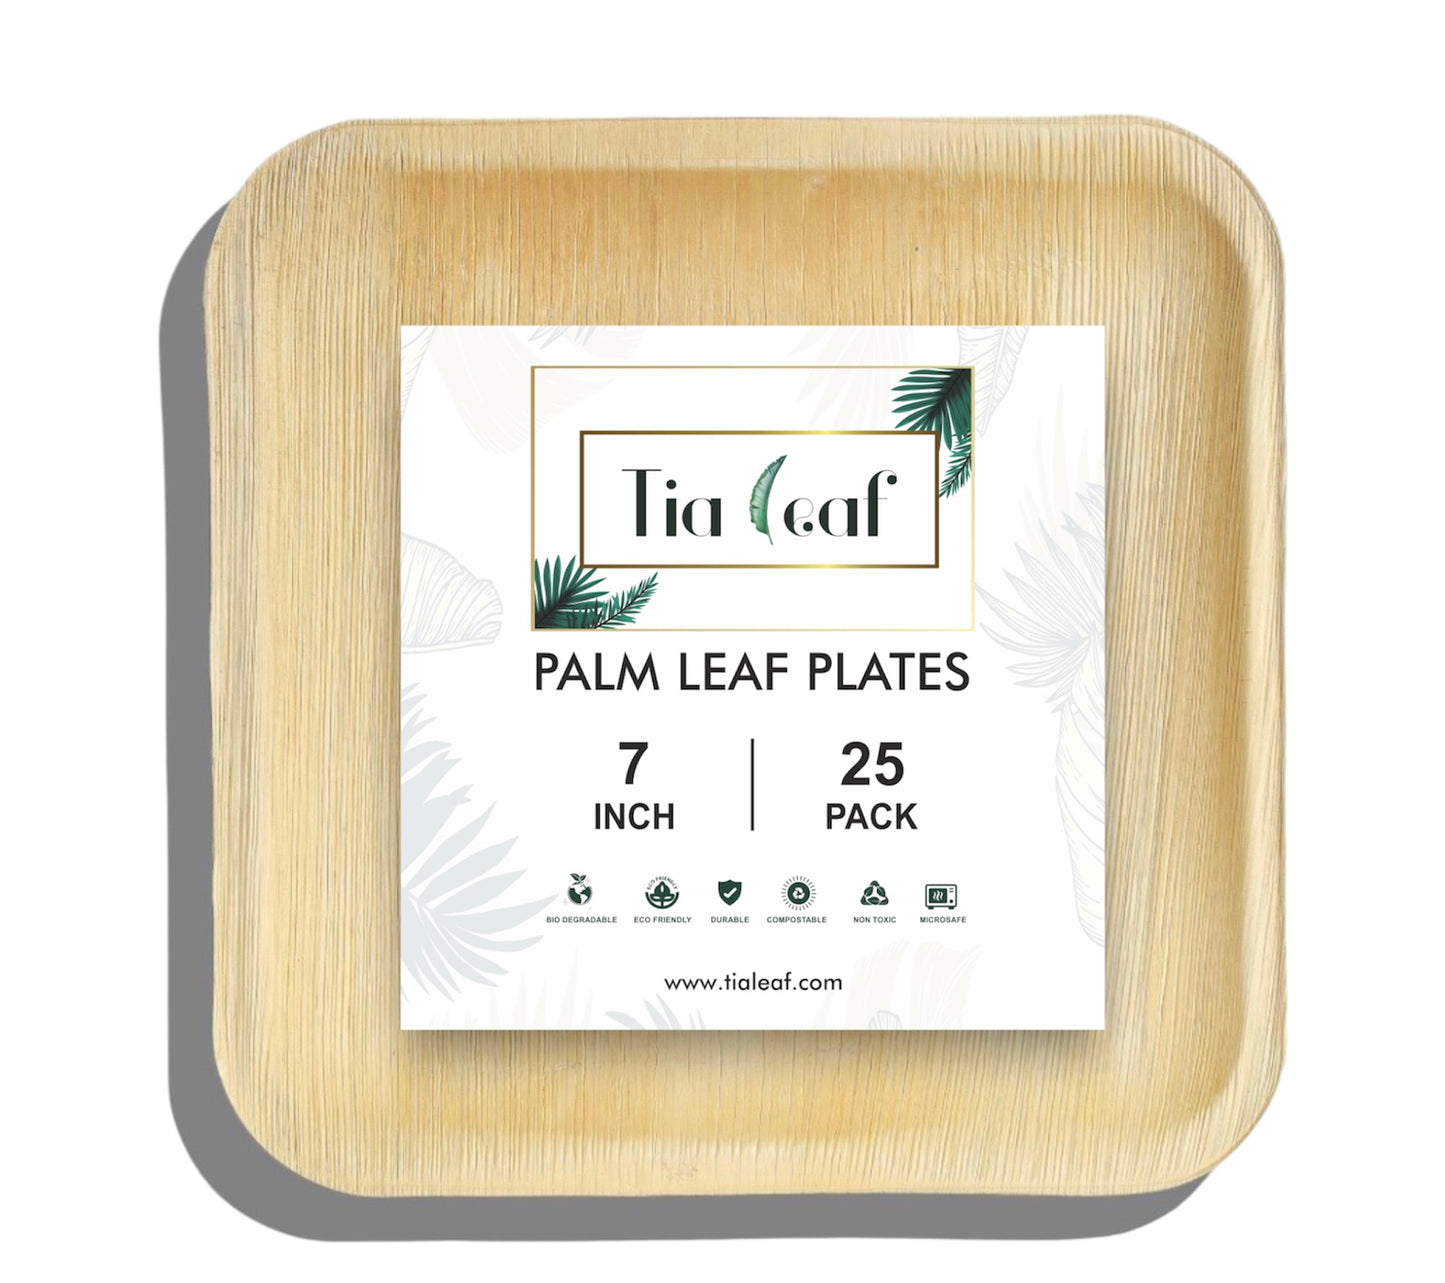 7" Square Palm Leaf Plates